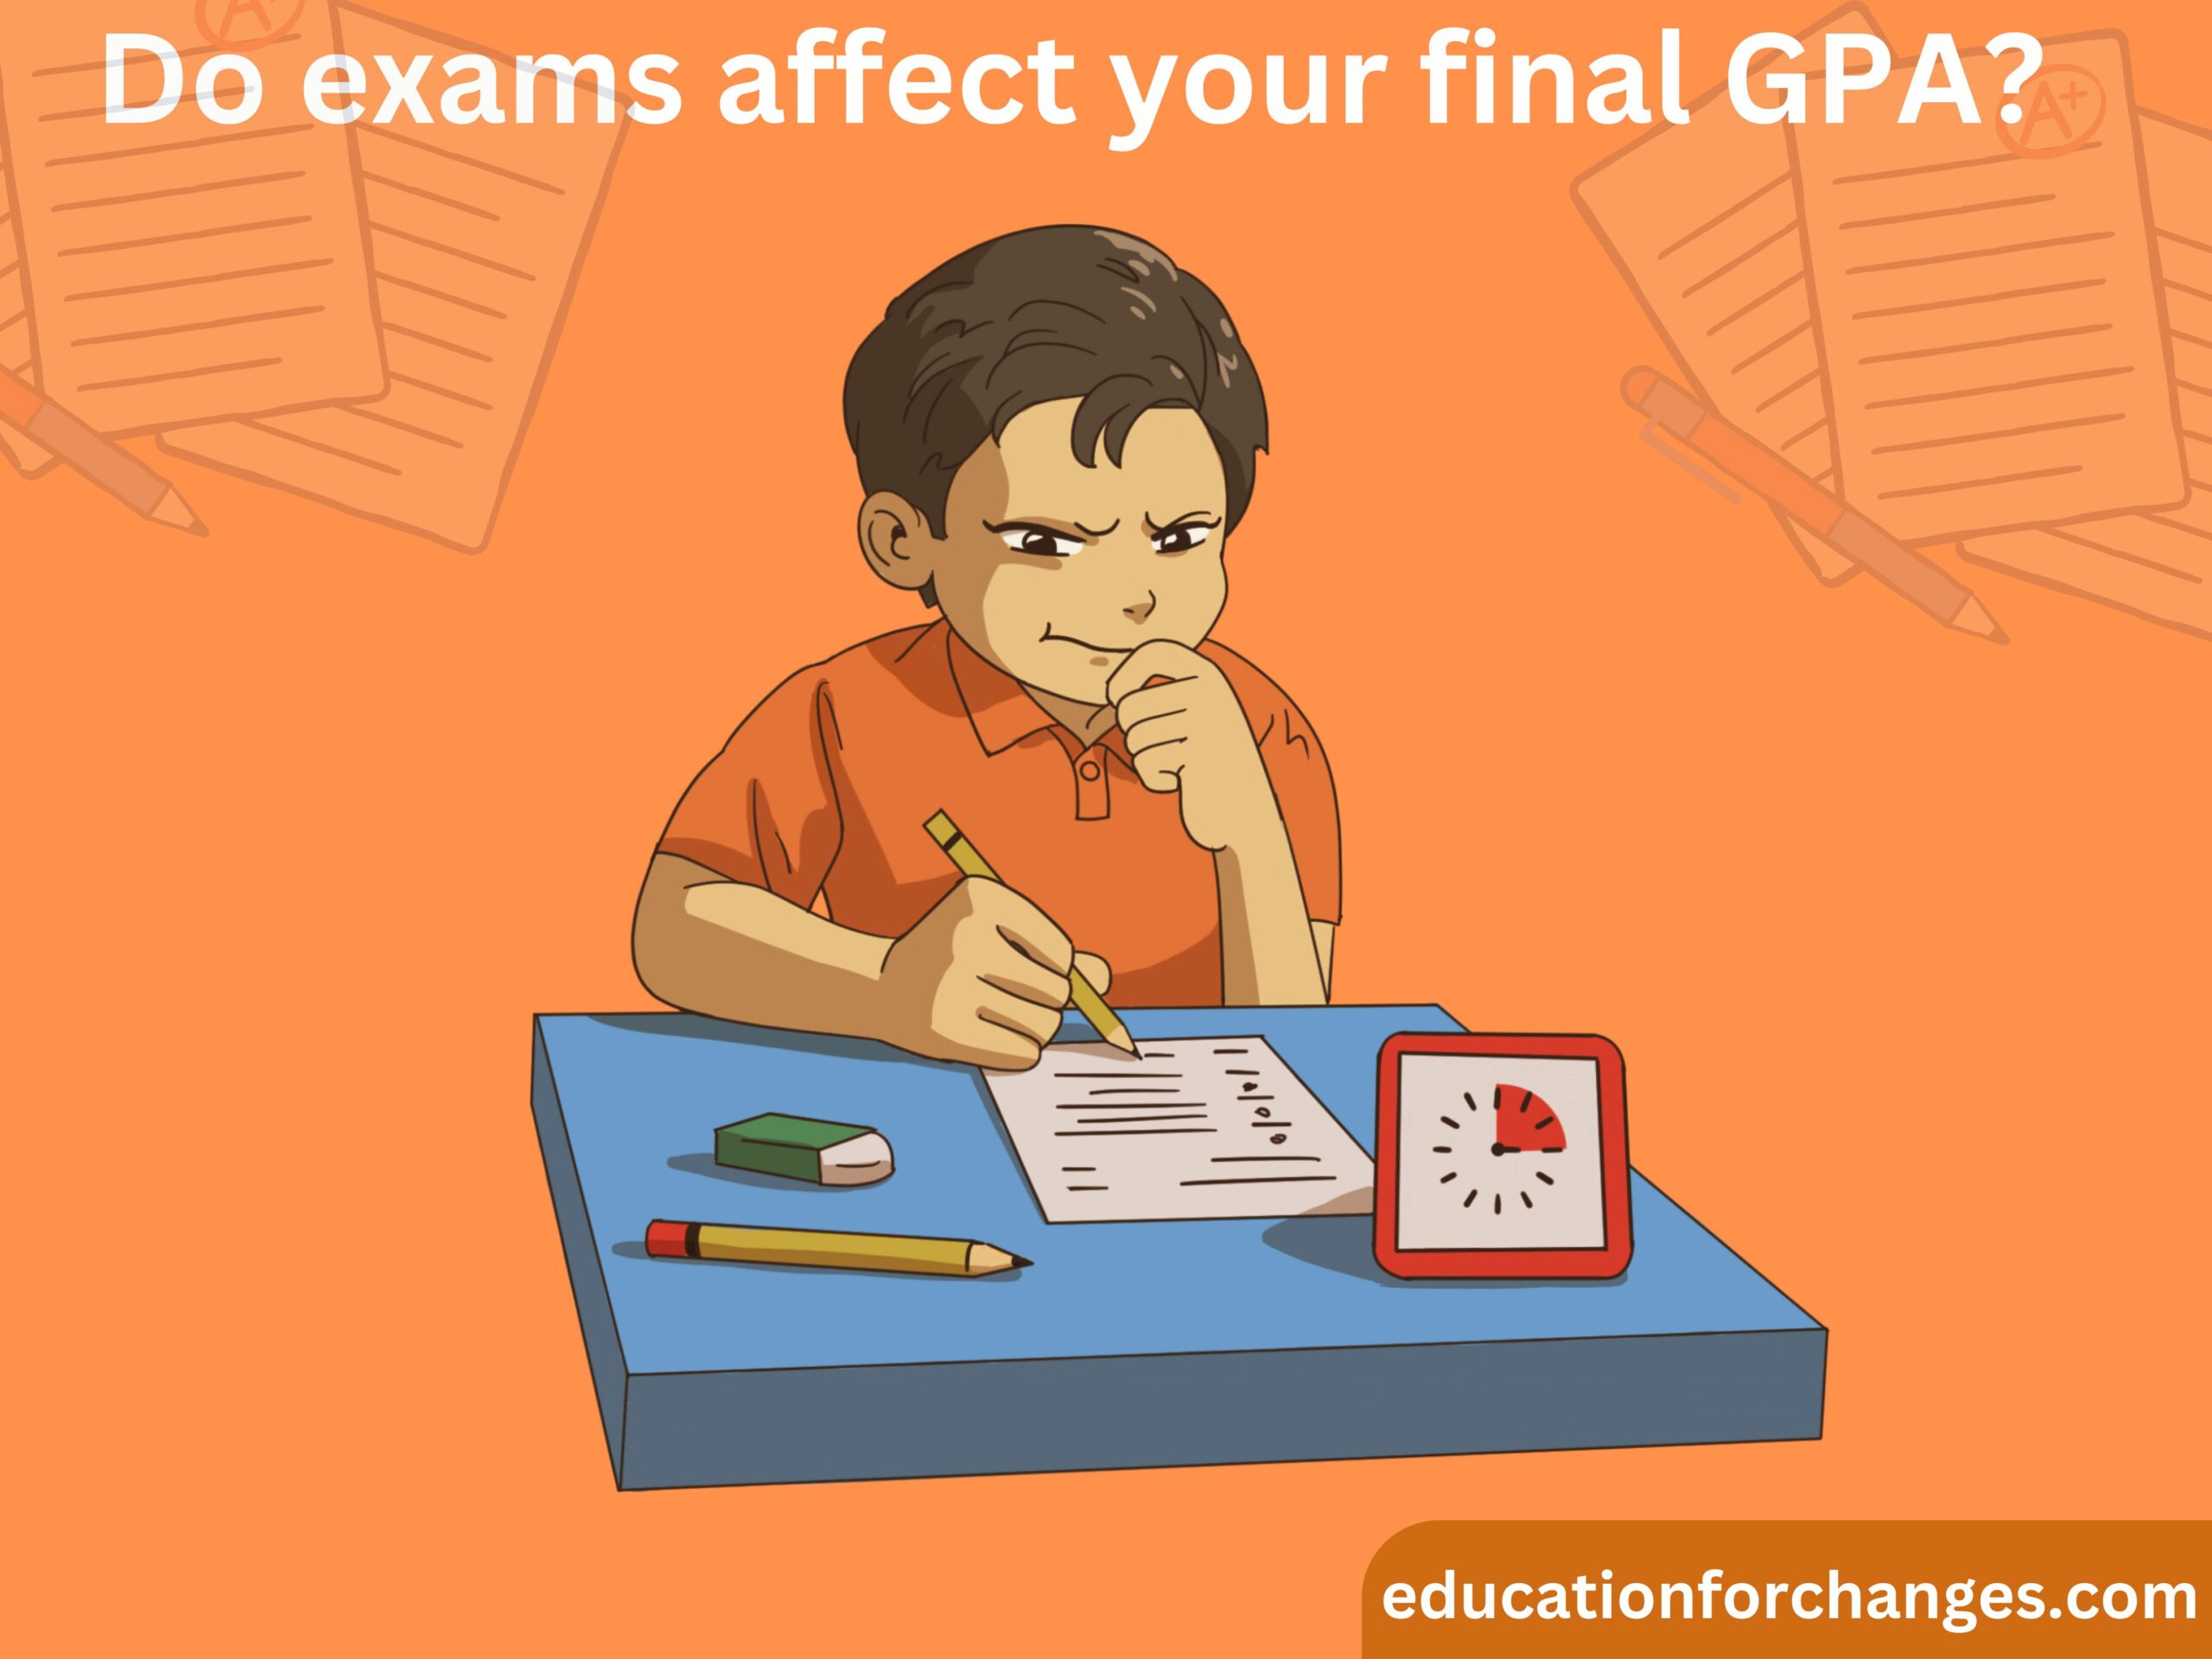 Do exams affect your final GPA?